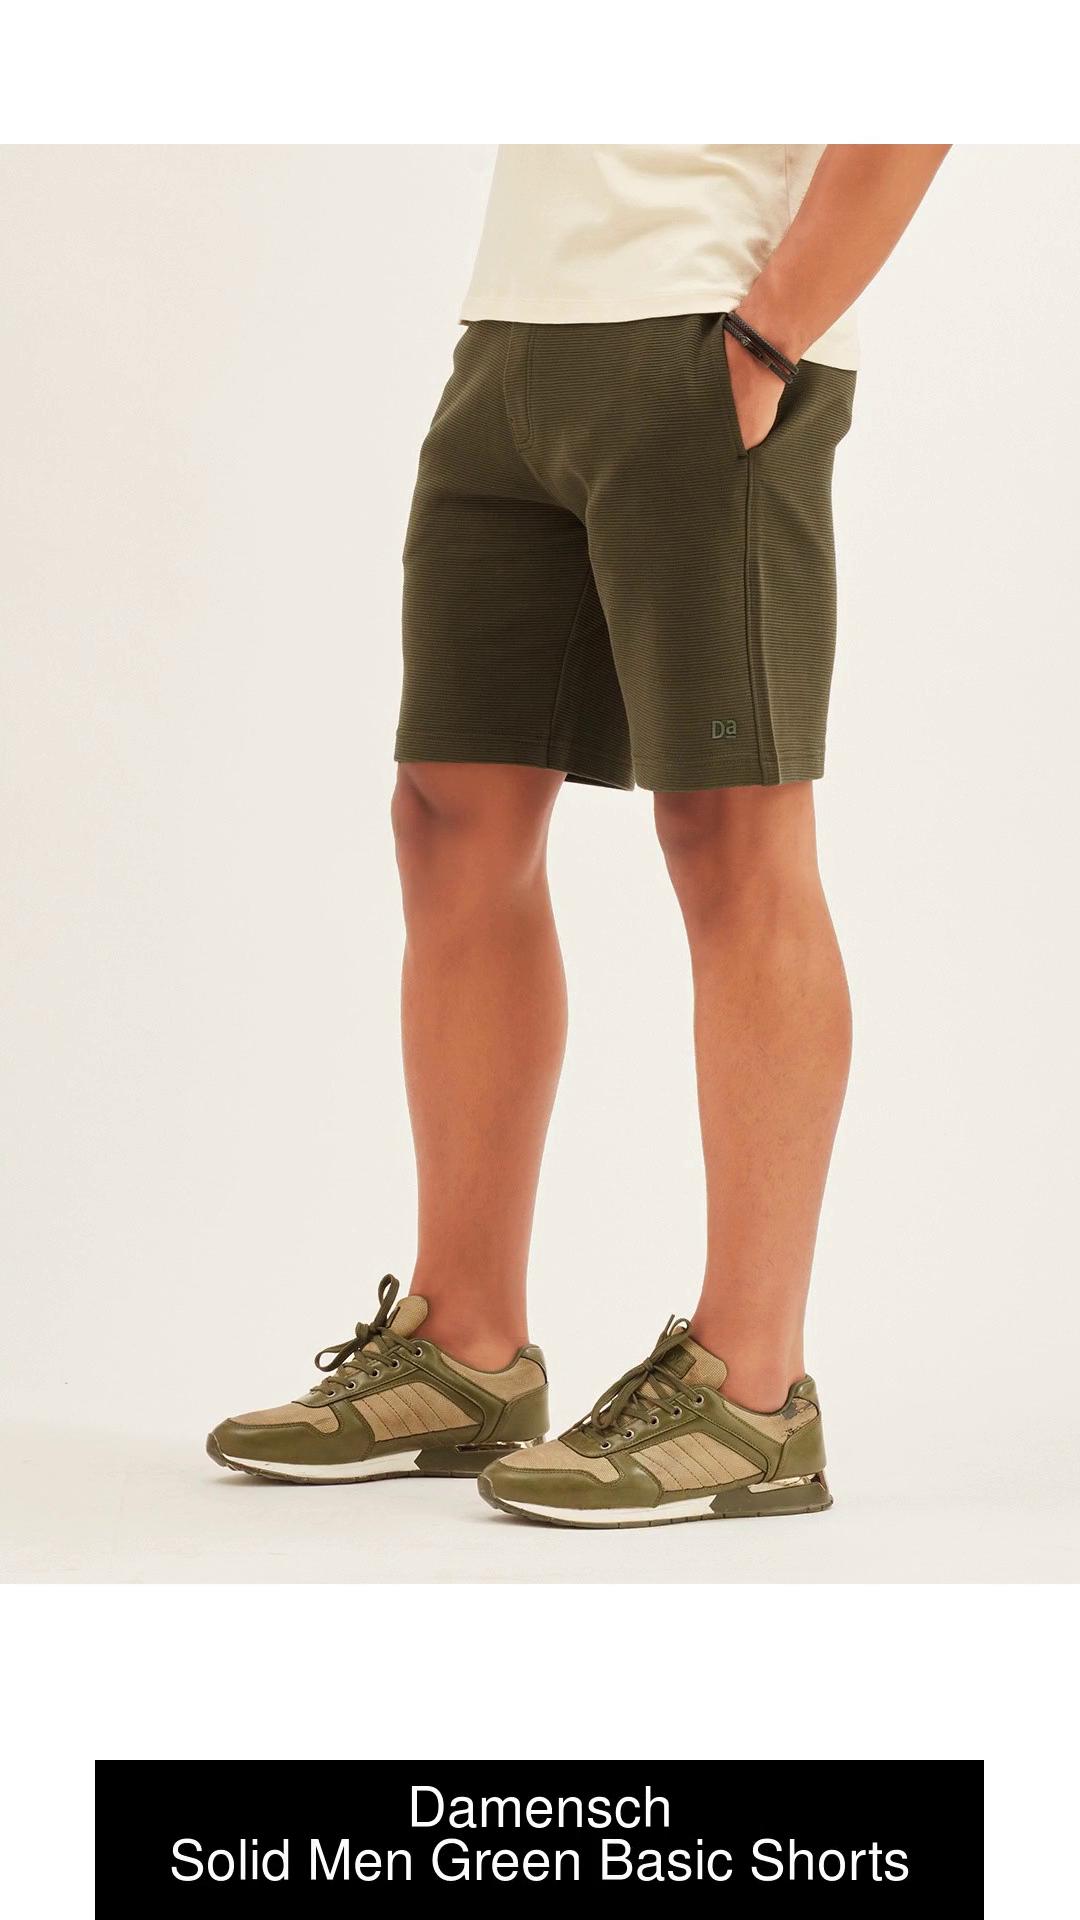 Damensch Solid Men Green Casual Shorts - Buy Damensch Solid Men